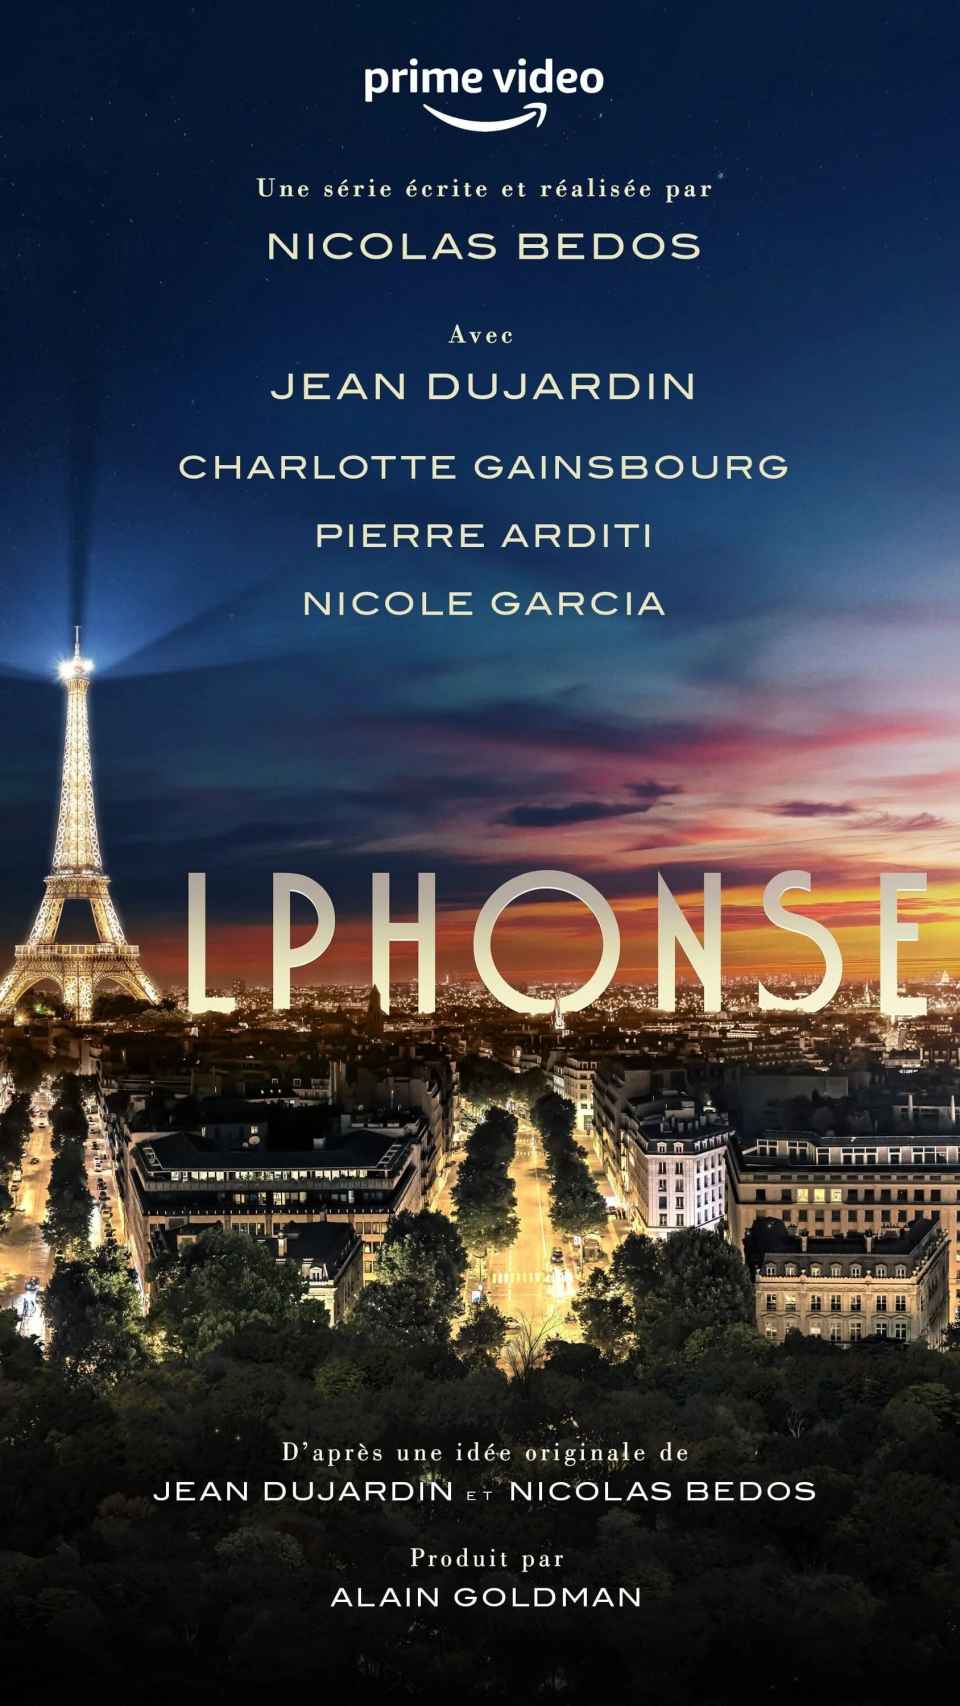 La miniserie 'Alphonse'